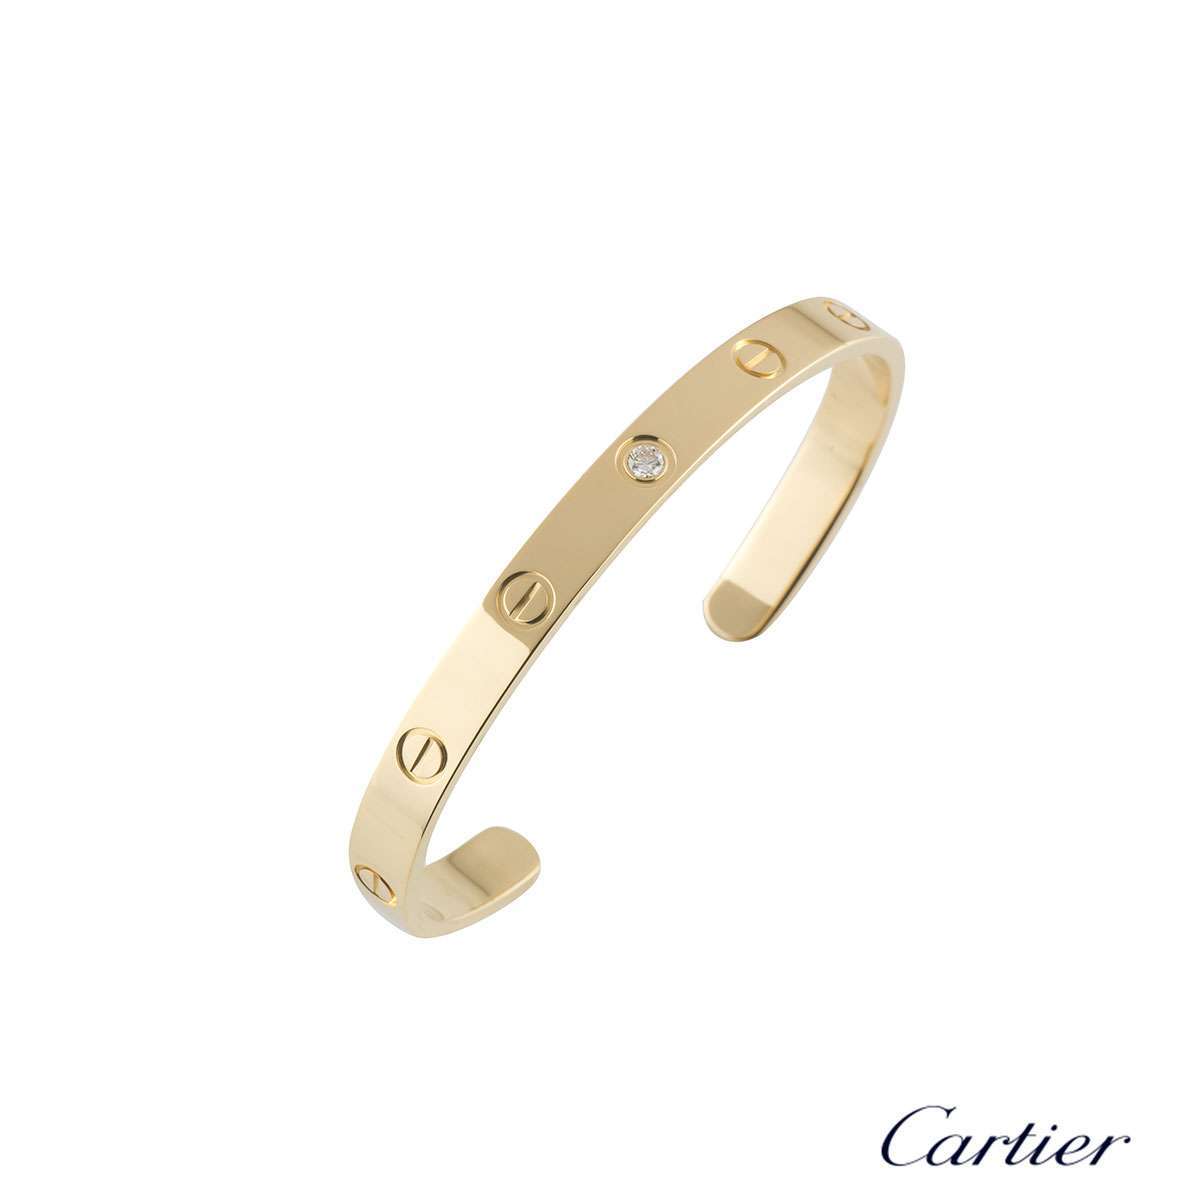 cartier love cuff or bracelet